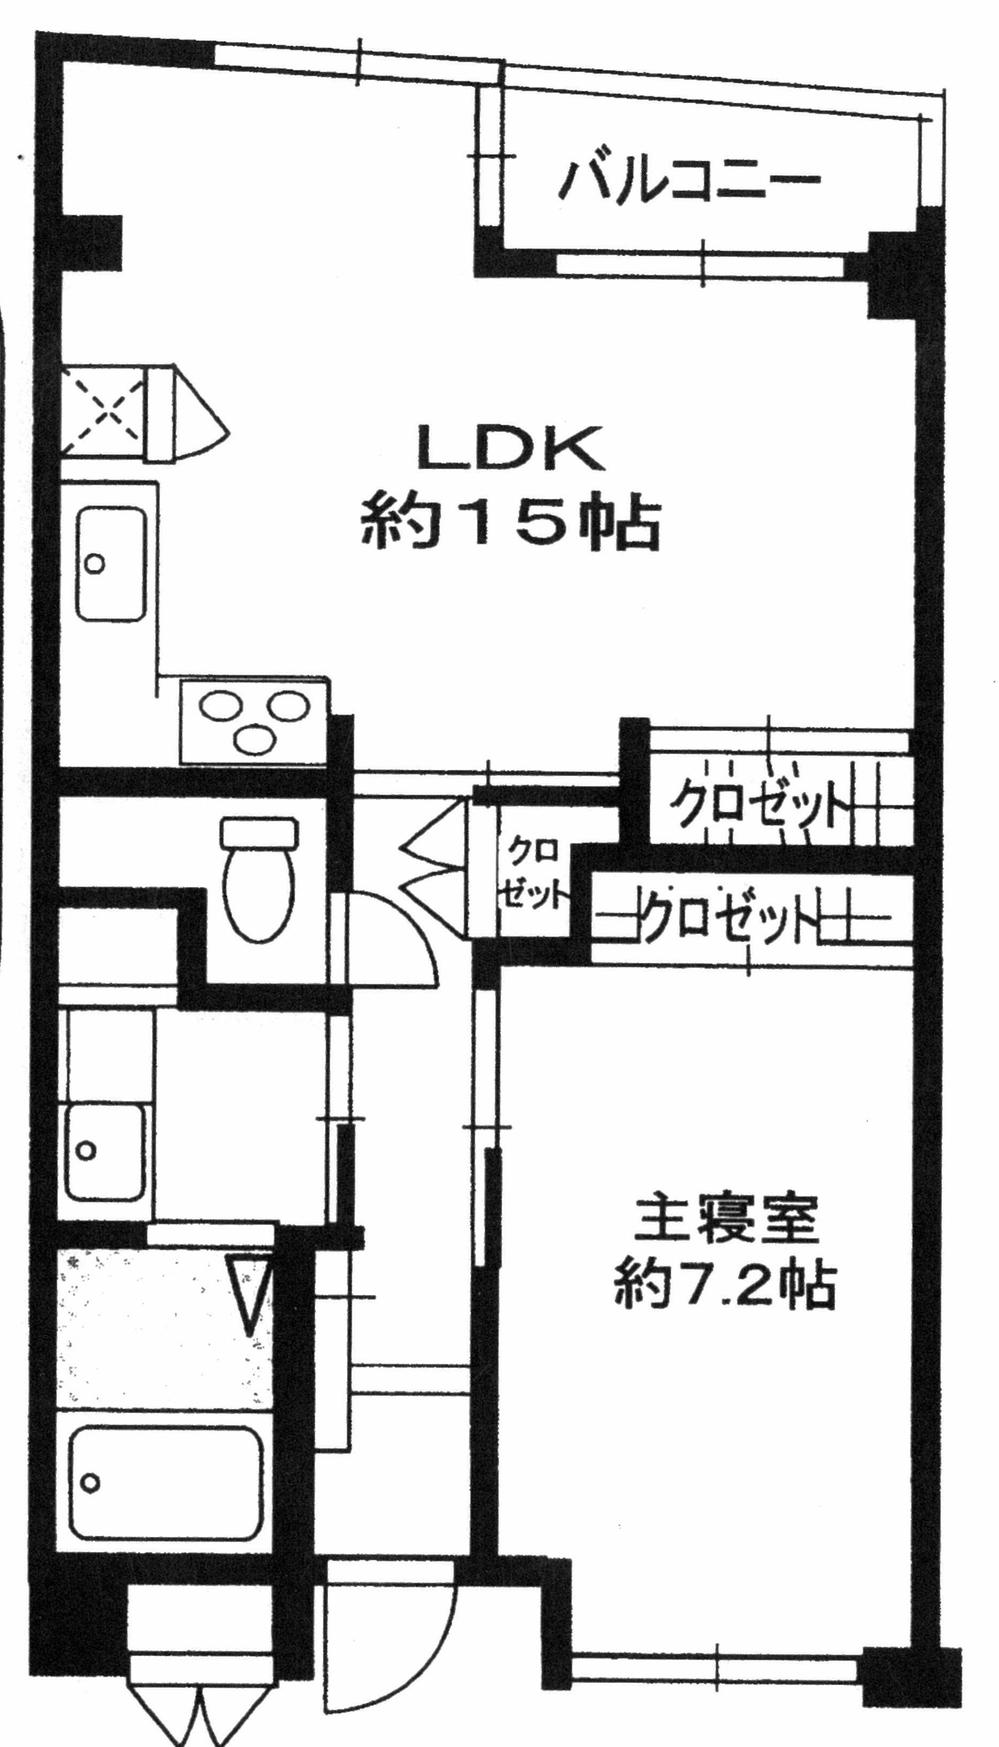 Floor plan. 1LDK, Price 15.9 million yen, Occupied area 55.45 sq m , Balcony area 3.82 sq m 1LDK, Price 17.5 million yen, Occupied area 55.45 sq m , Balcony area 3.82 sq m .